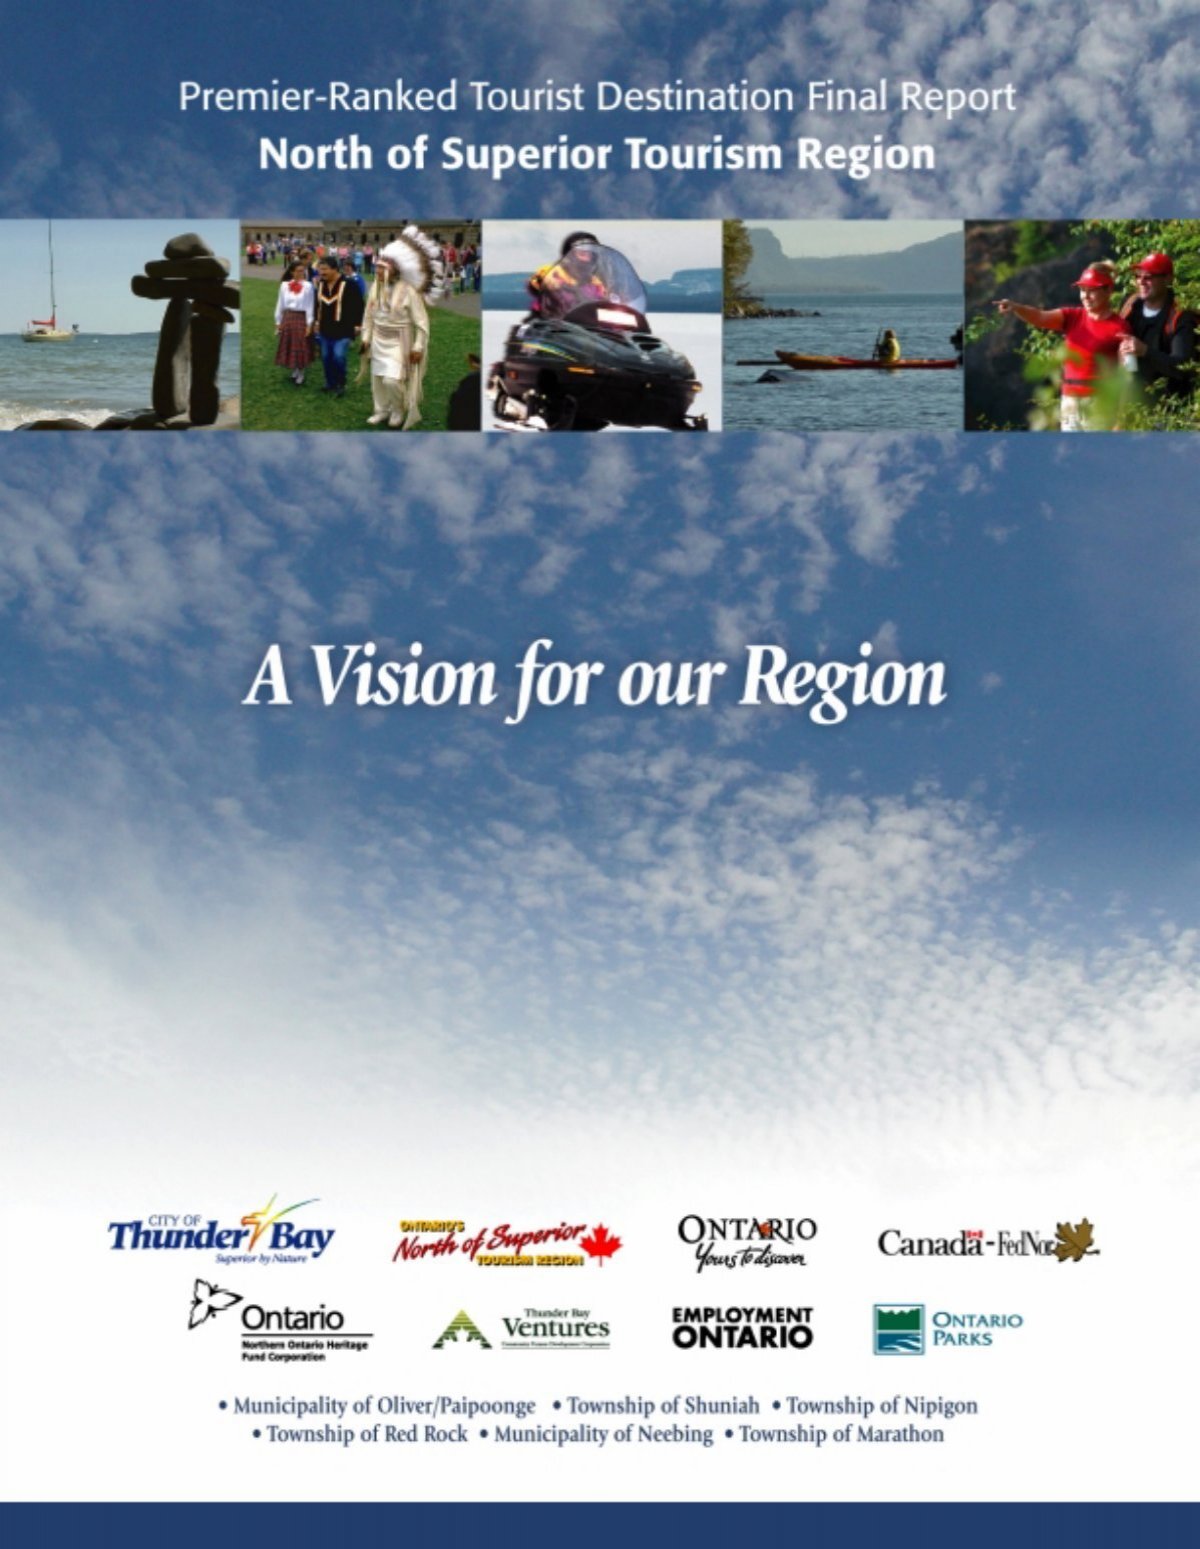 premier-ranked tourist destination final report - Ministry of Tourism